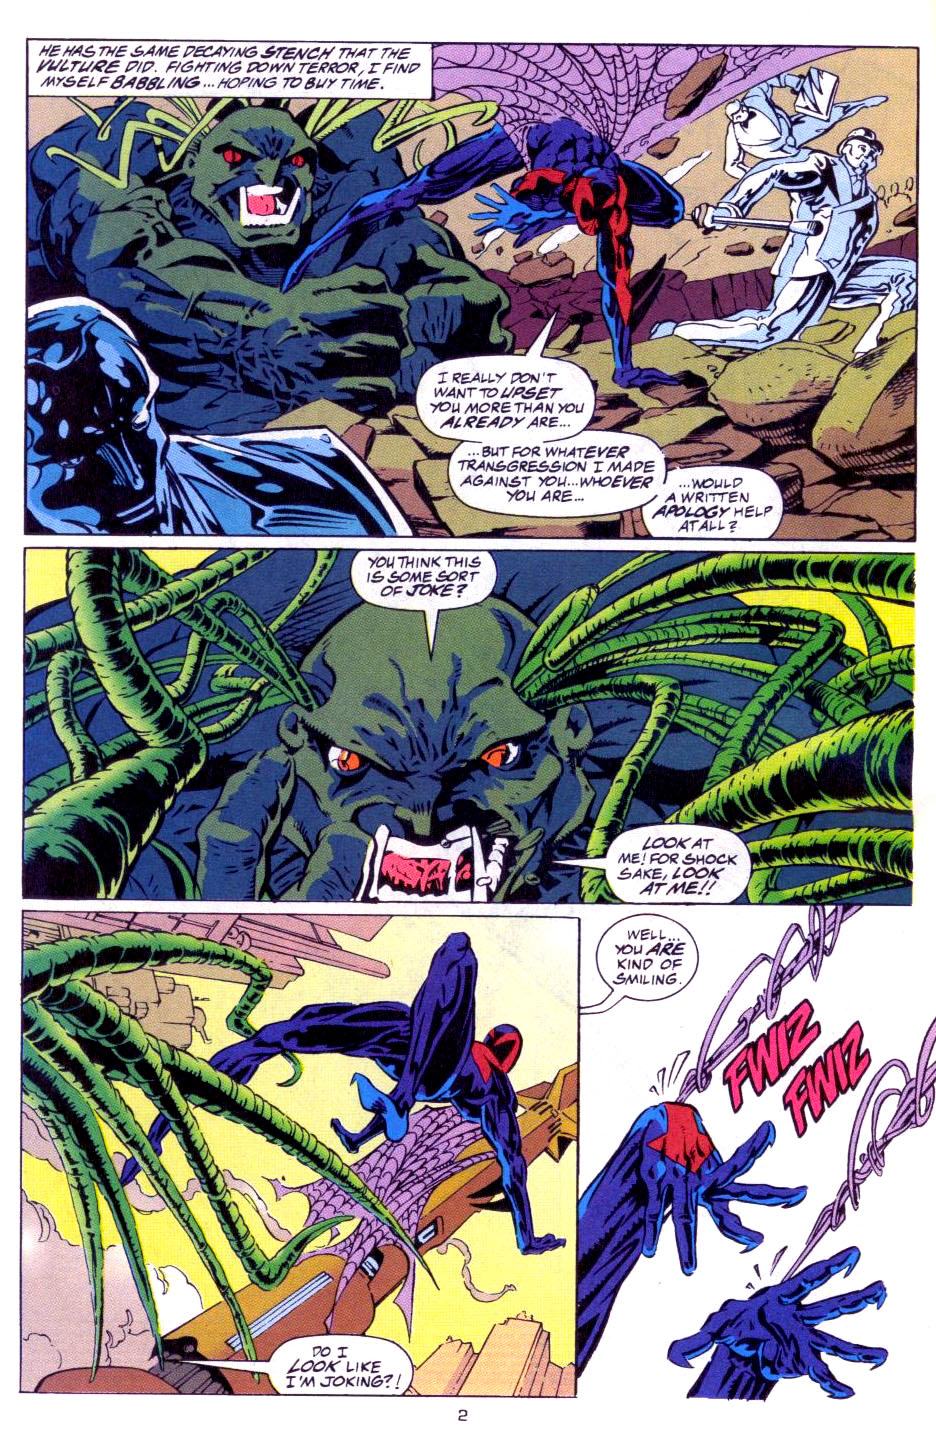 Spider-Man 2099 (1992) issue 28 - Page 3